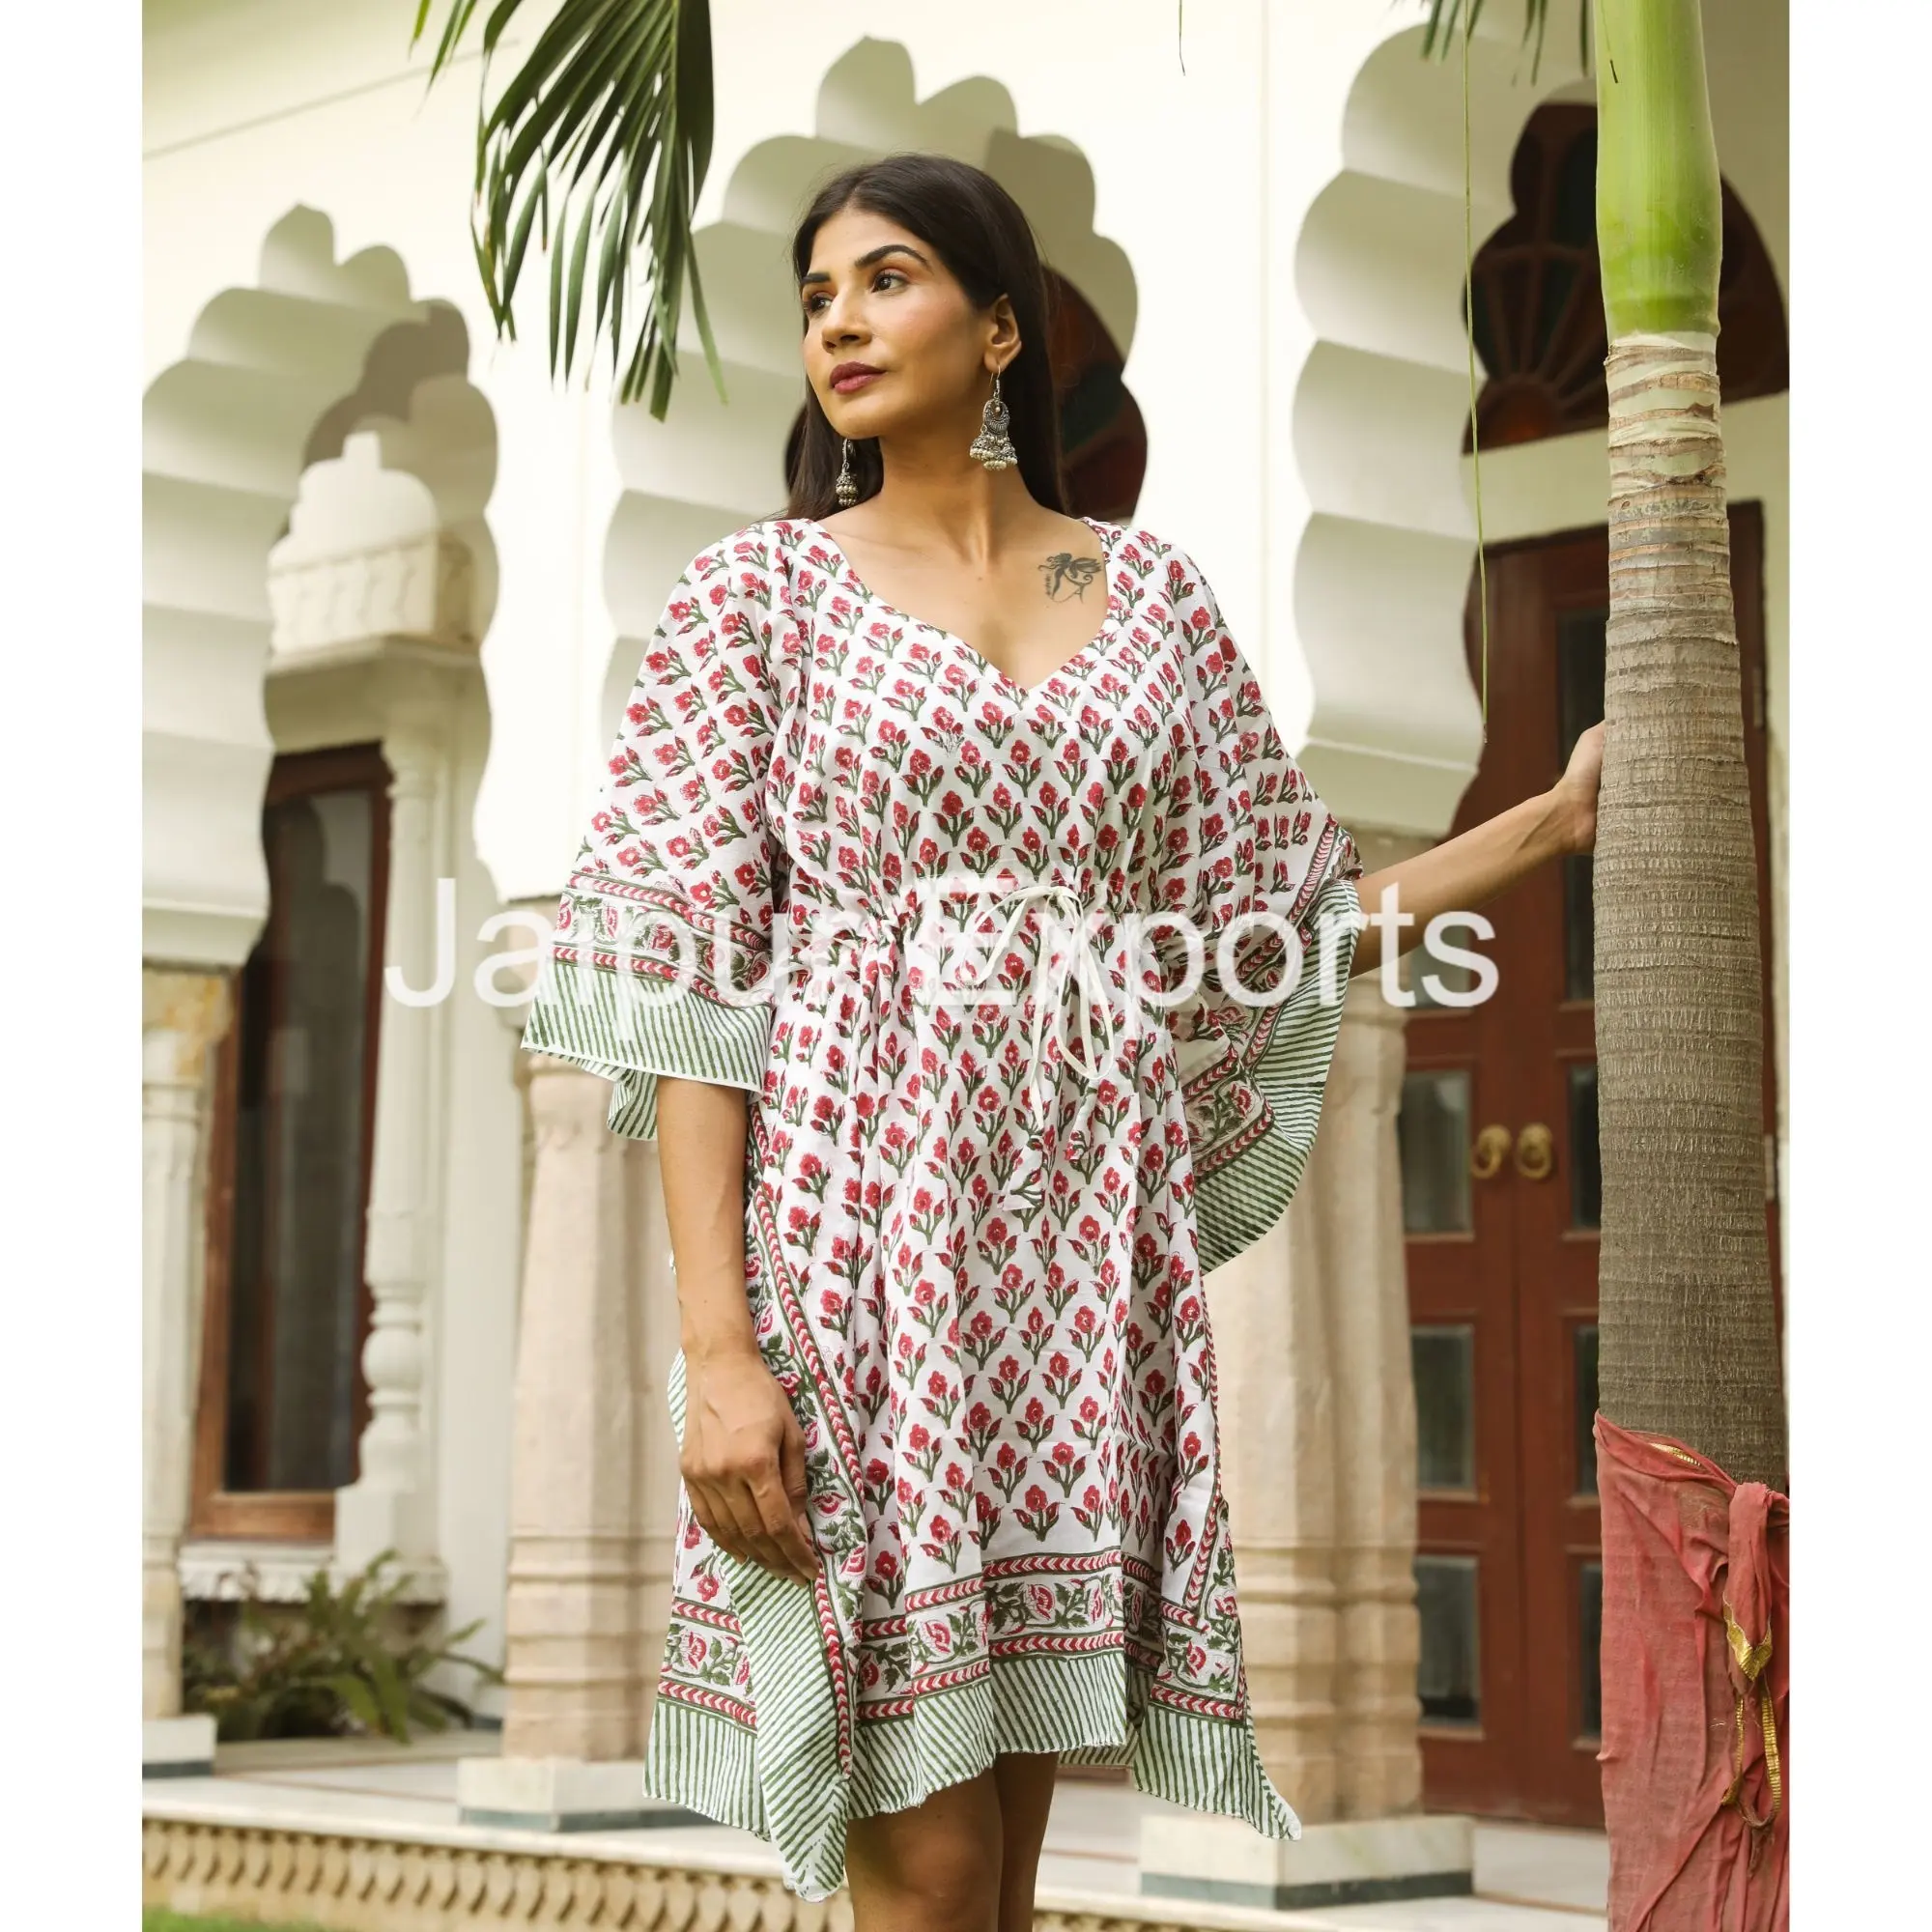 Plus-Size Women Dress Kaftan Boho Cotton Short Dress Loose Beach Holiday Dress Casual Summer Clothing For